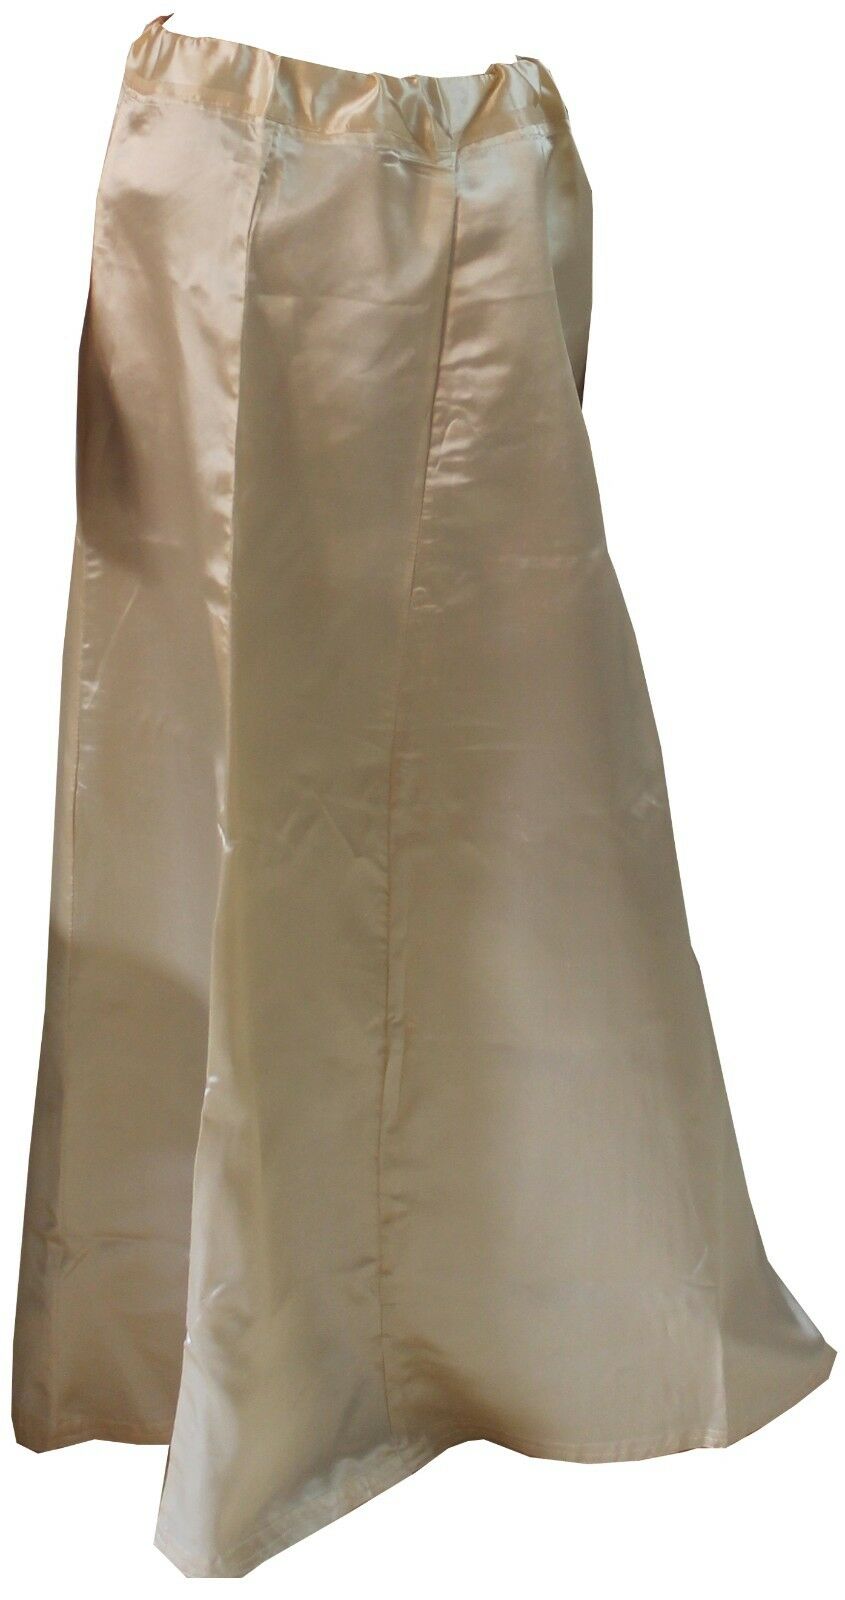 Cream   Luxurious soft satin skirt  Petticoat Underskirt belly dancing  slip